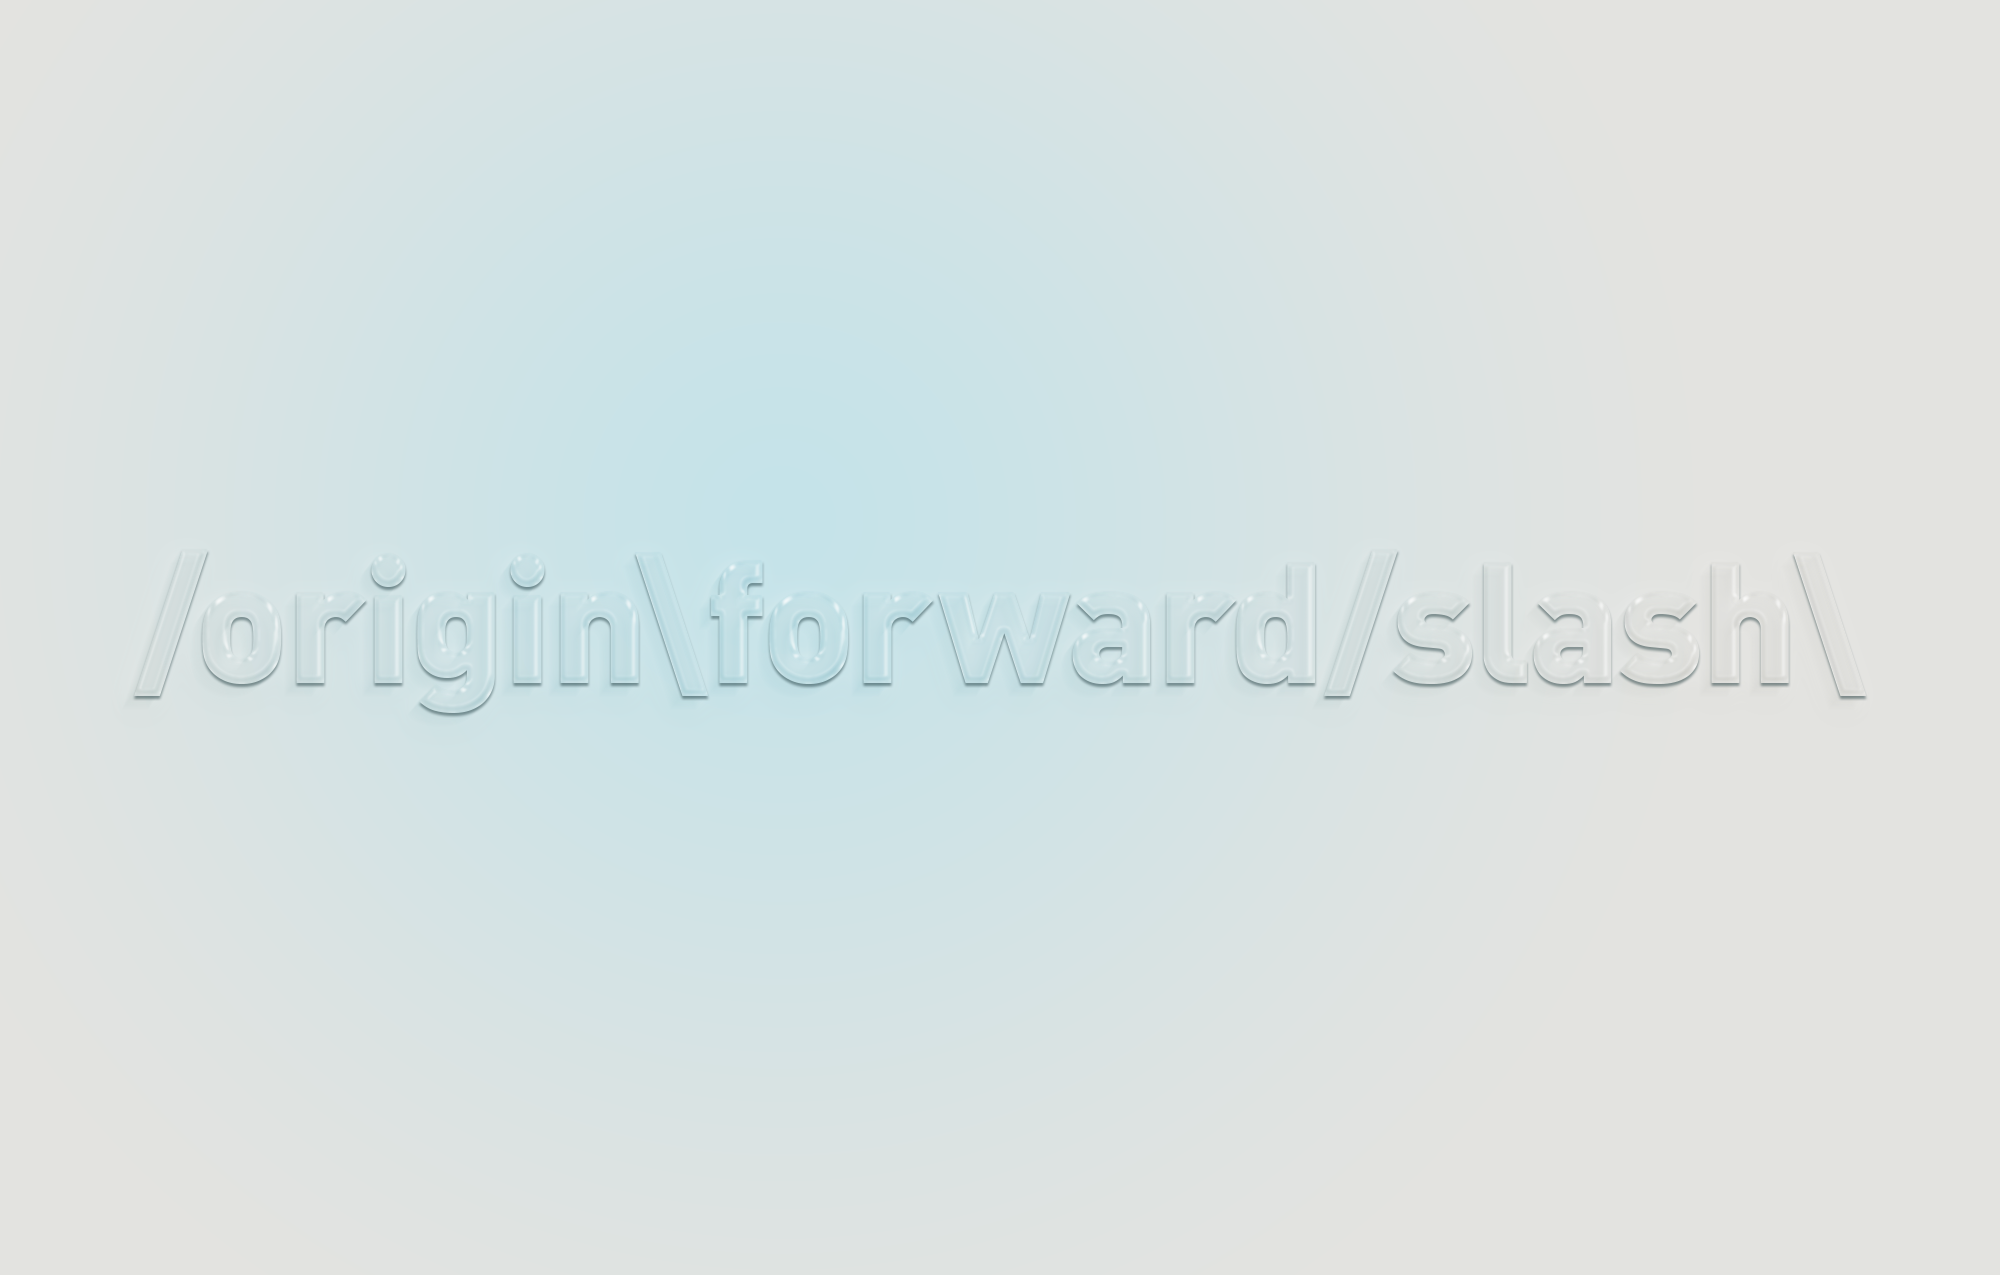 /origin\forward/slash\